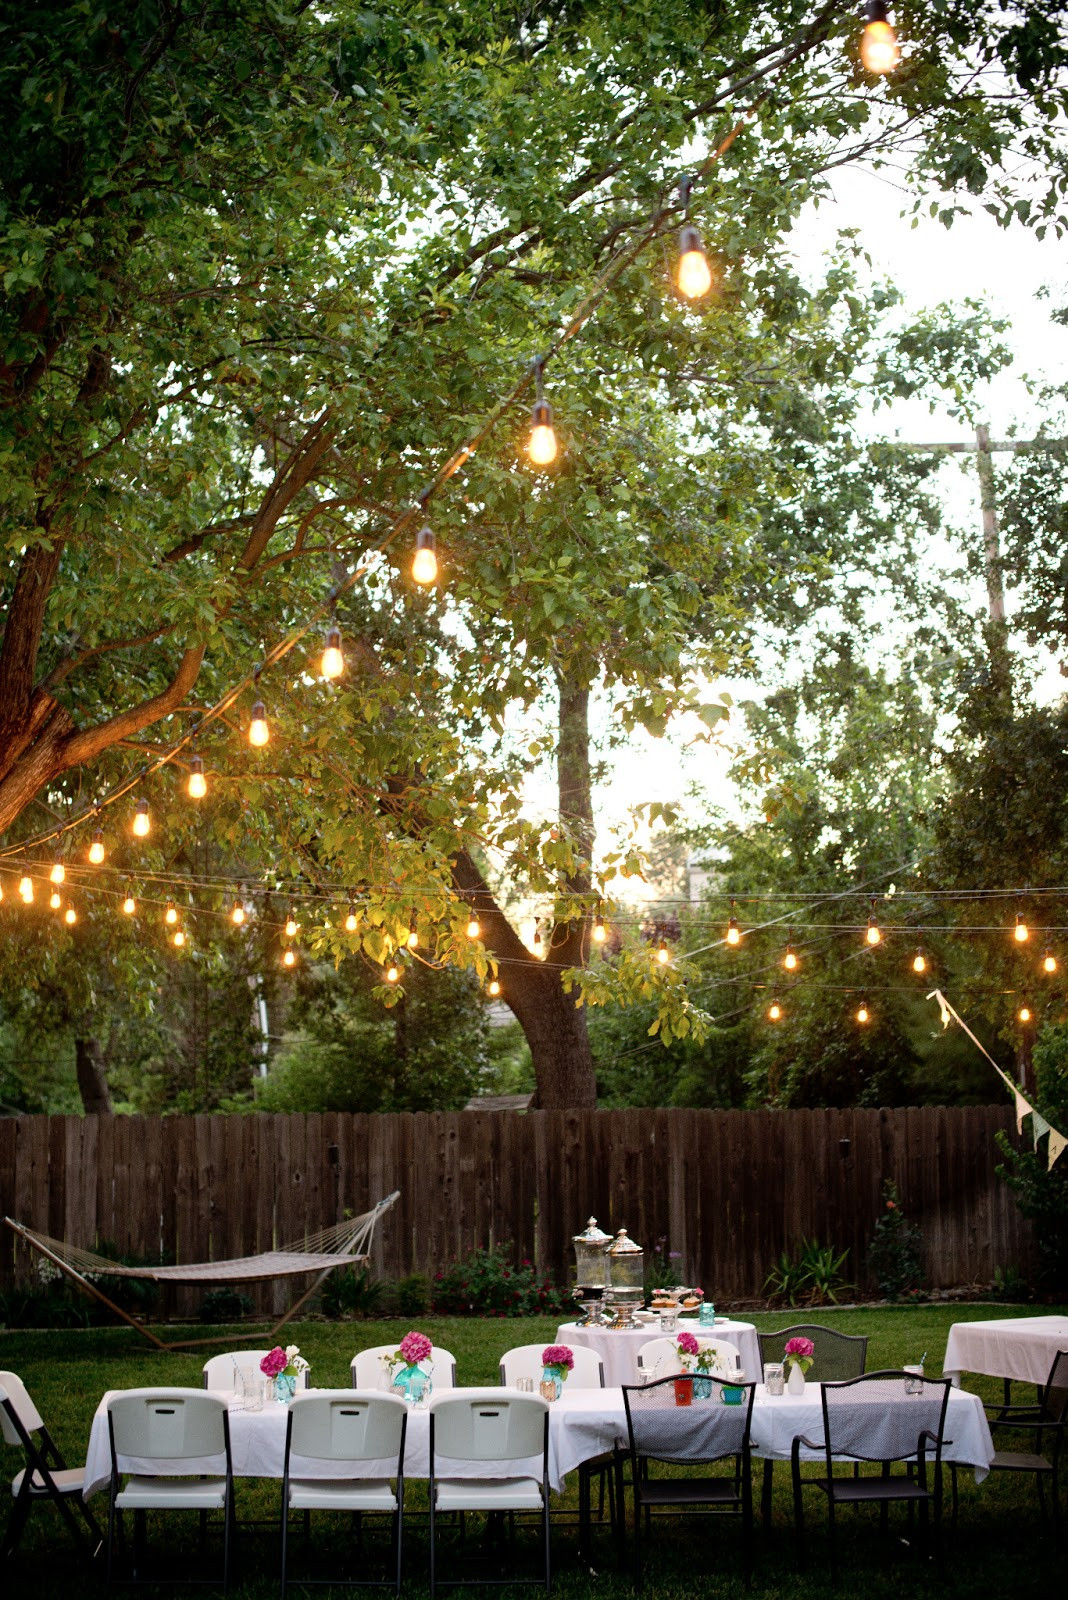 Backyard Lighting Ideas For A Party
 Domestic Fashionista Backyard Birthday Fun Pink